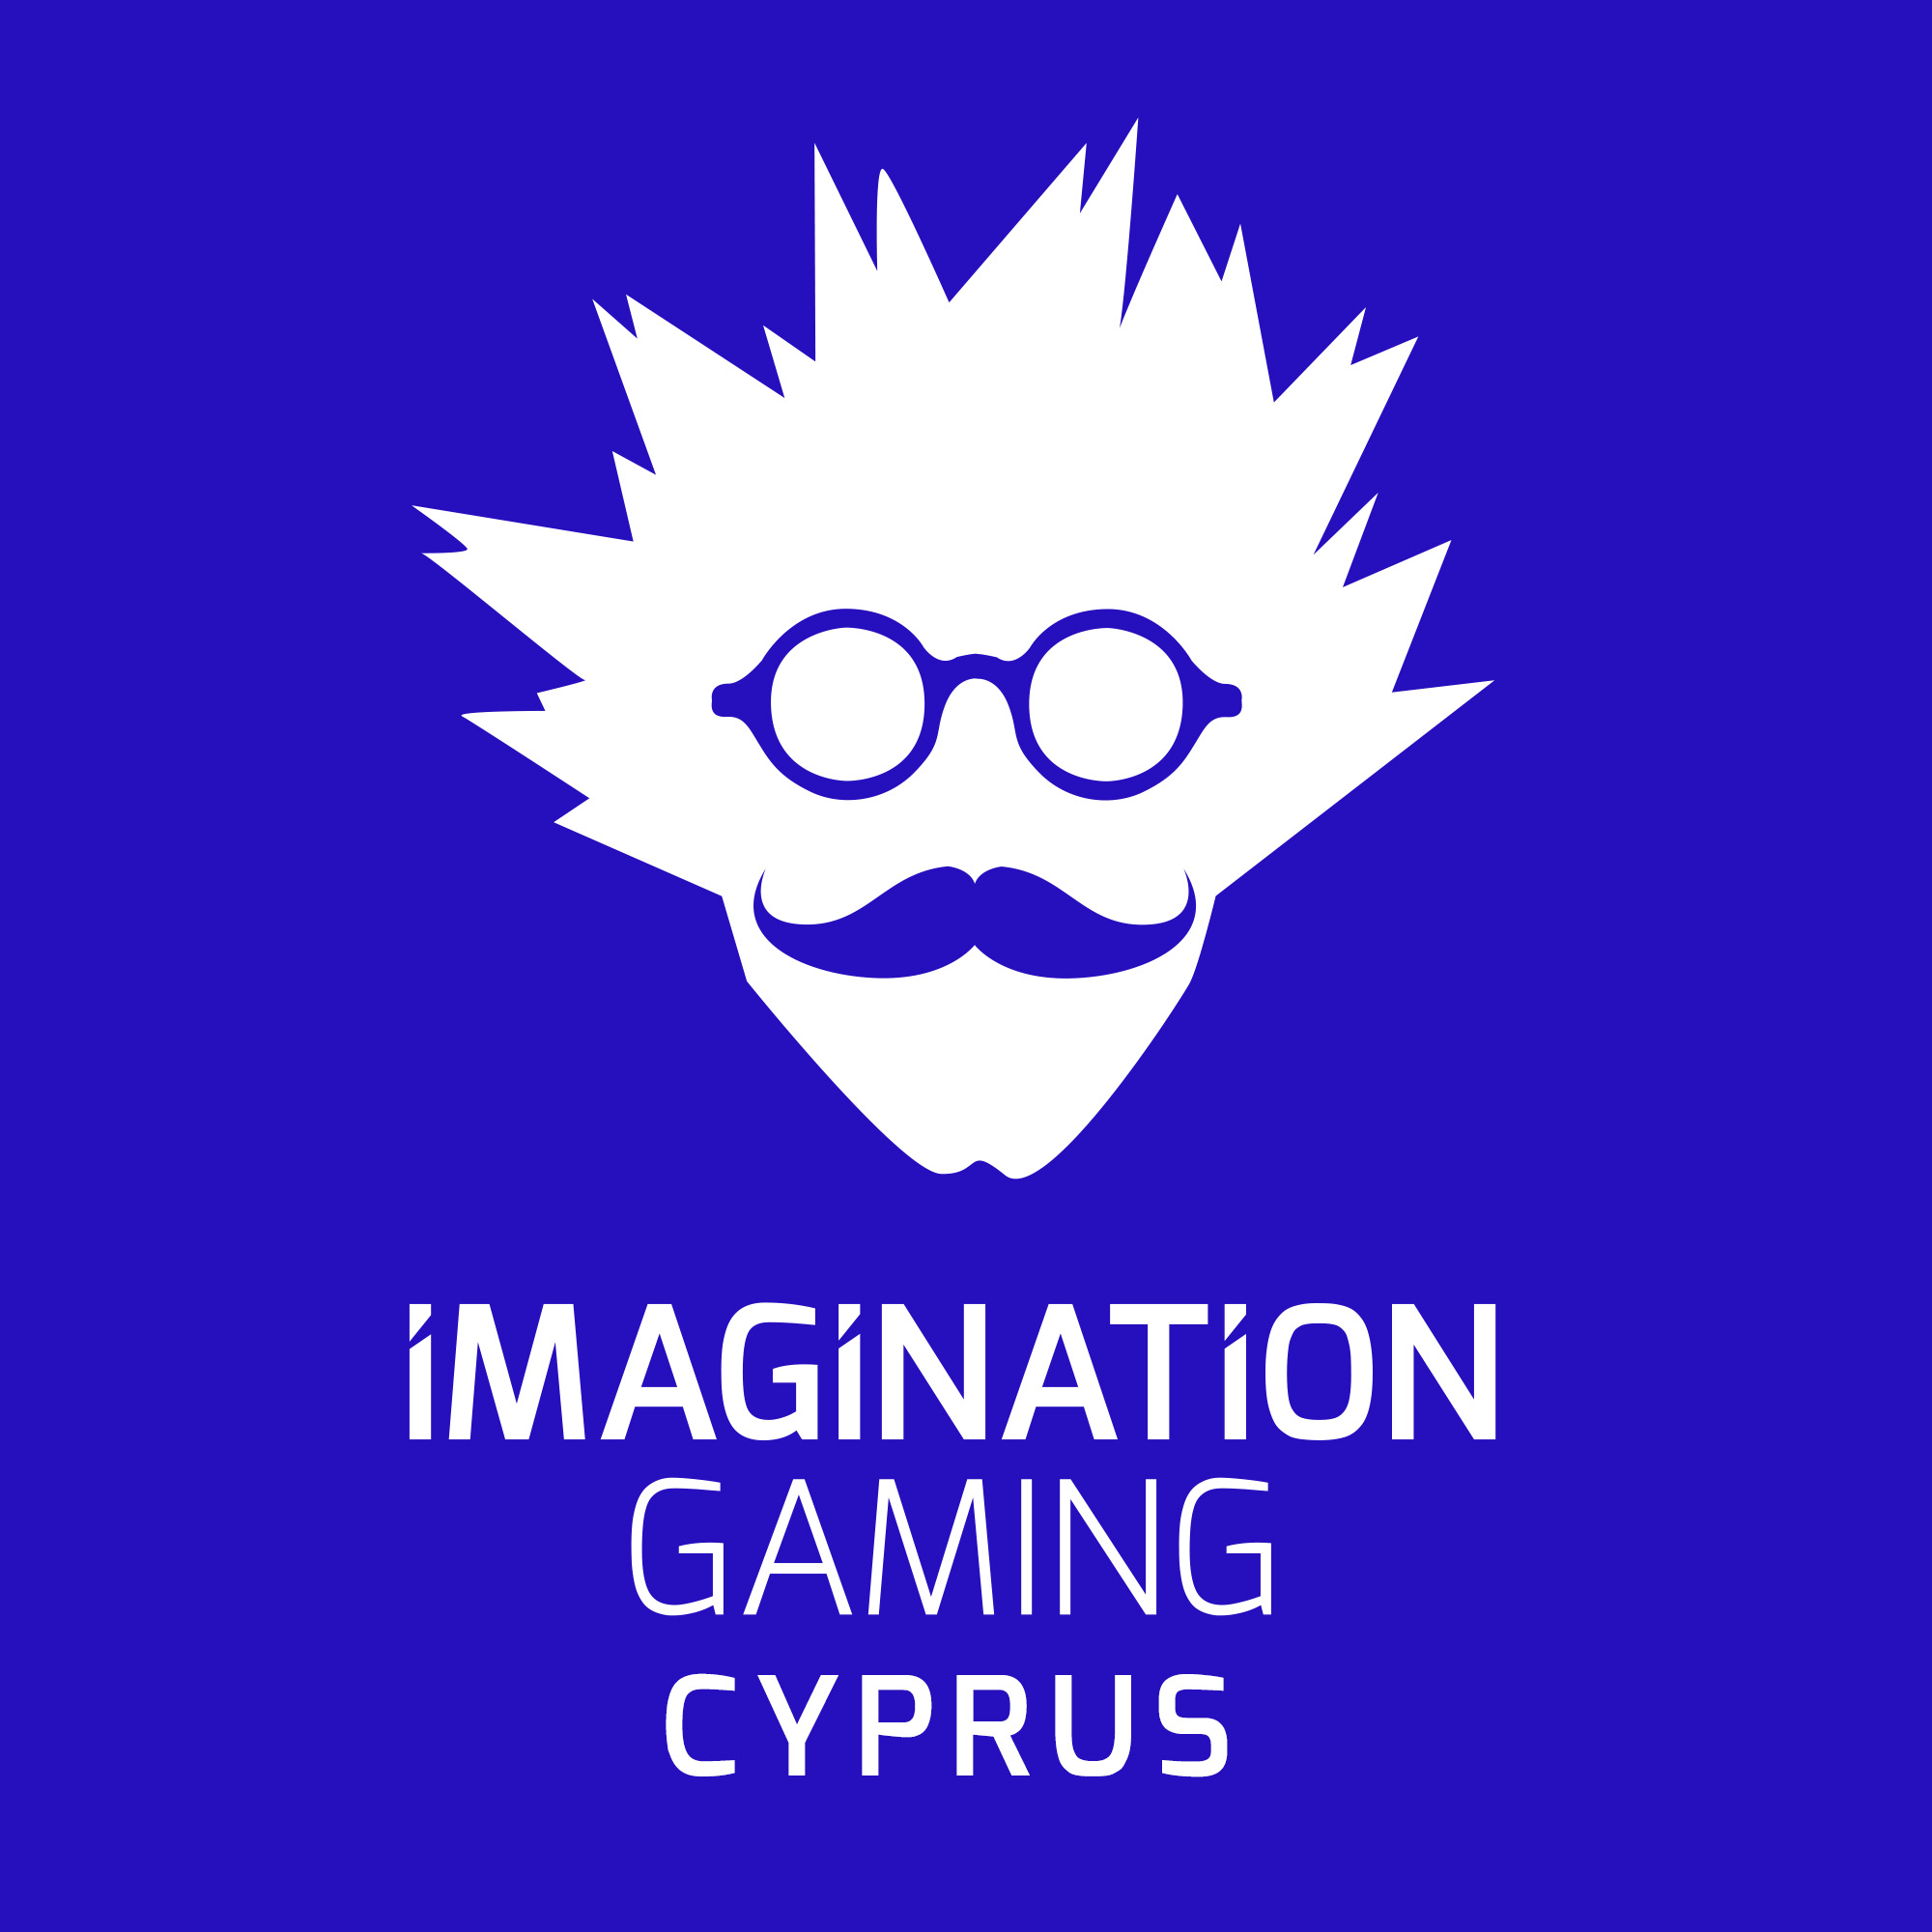 Imagination Gaming Cyprus logo